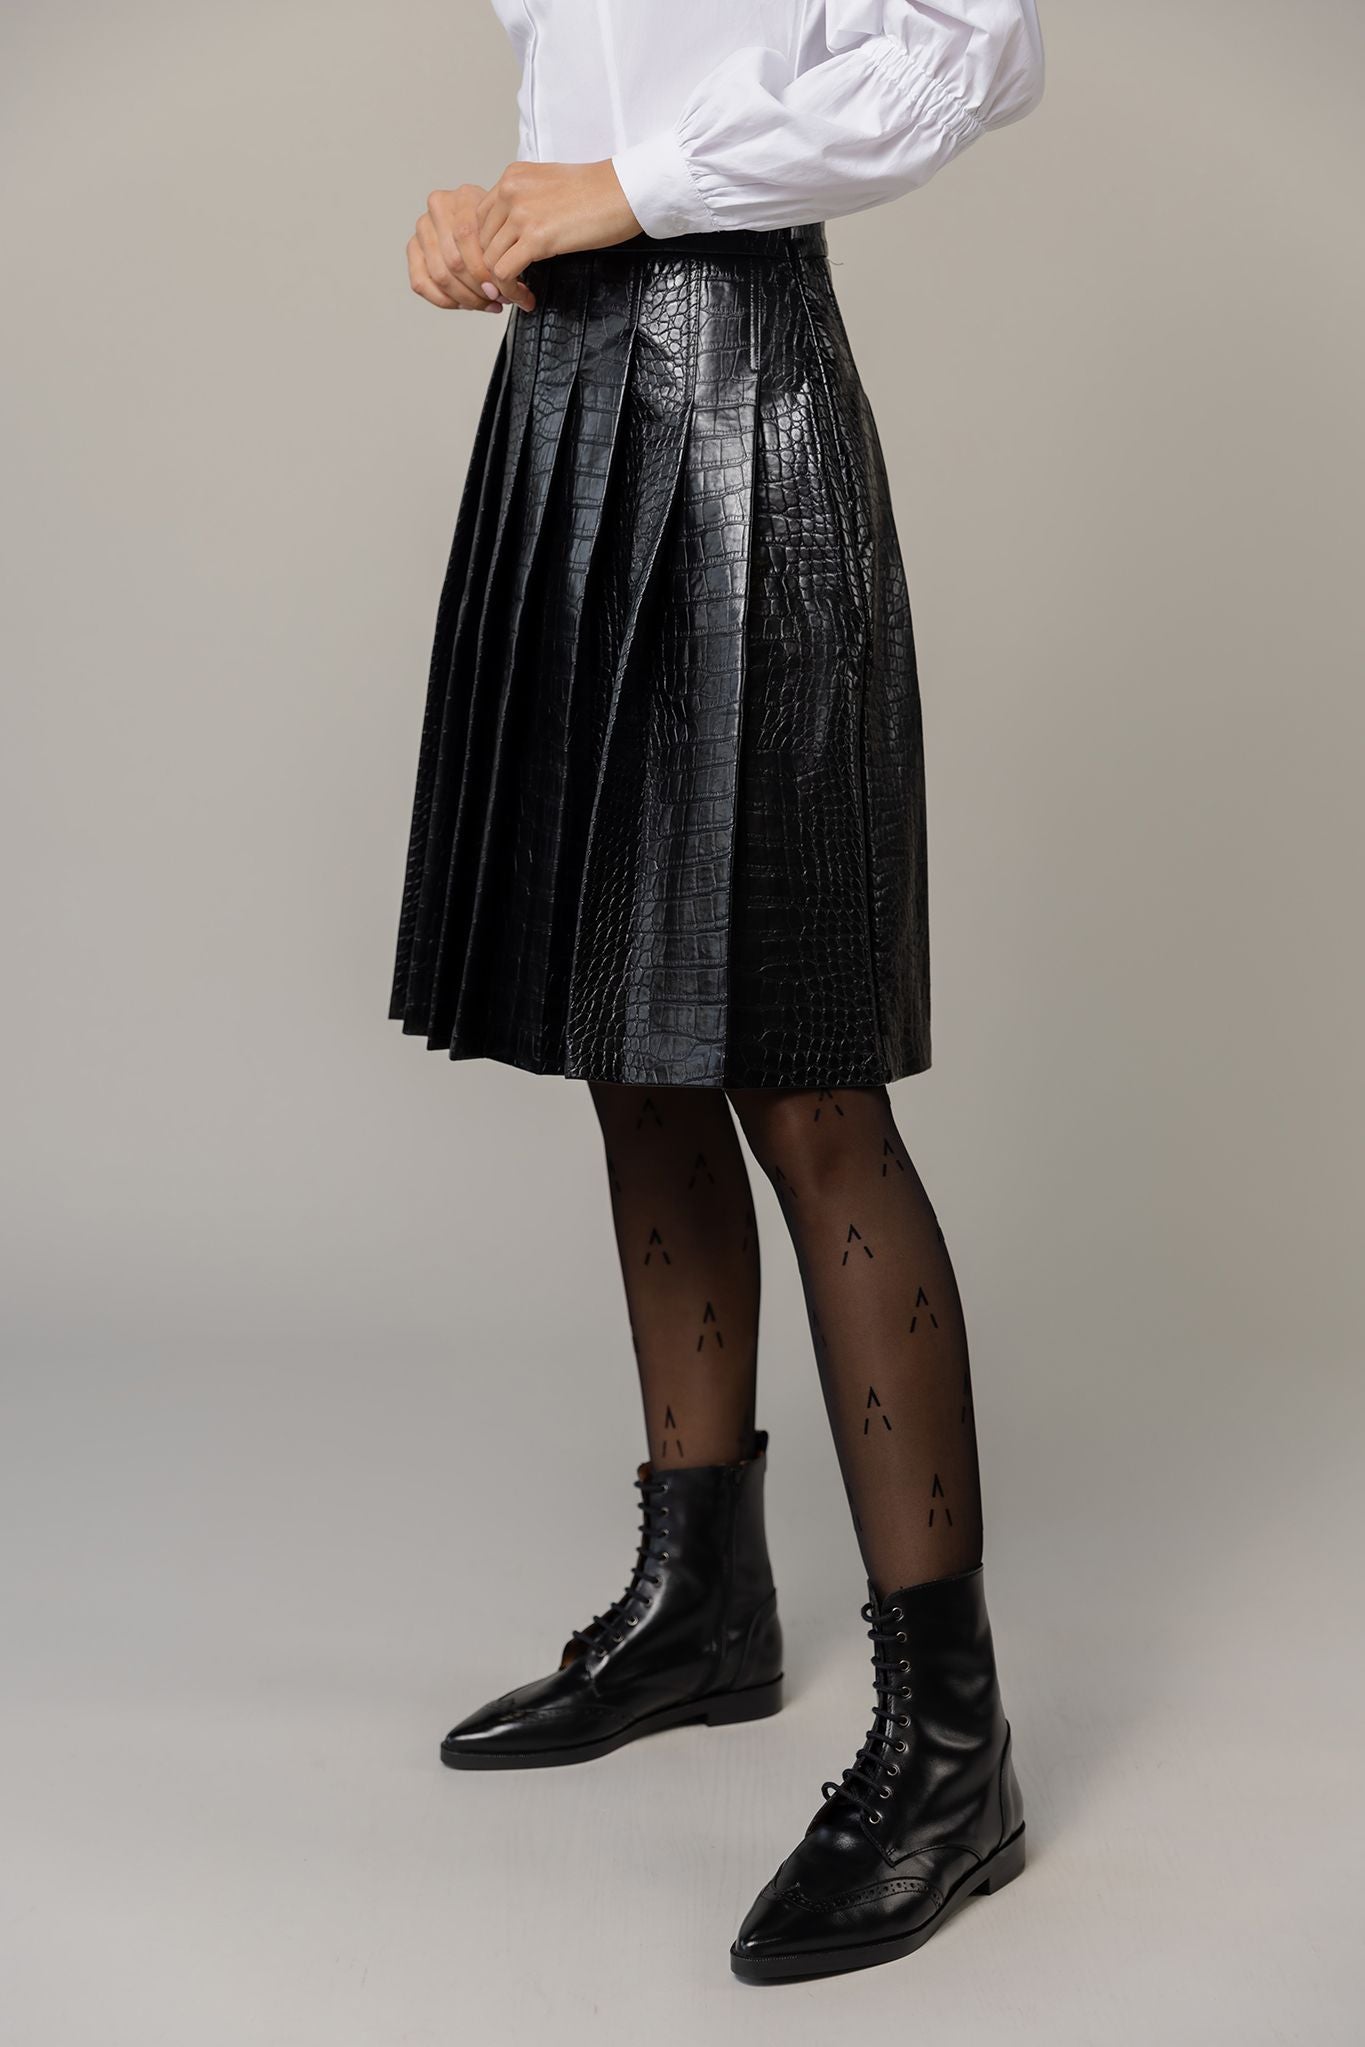 Tribeca Skirt in Croc Effect Black